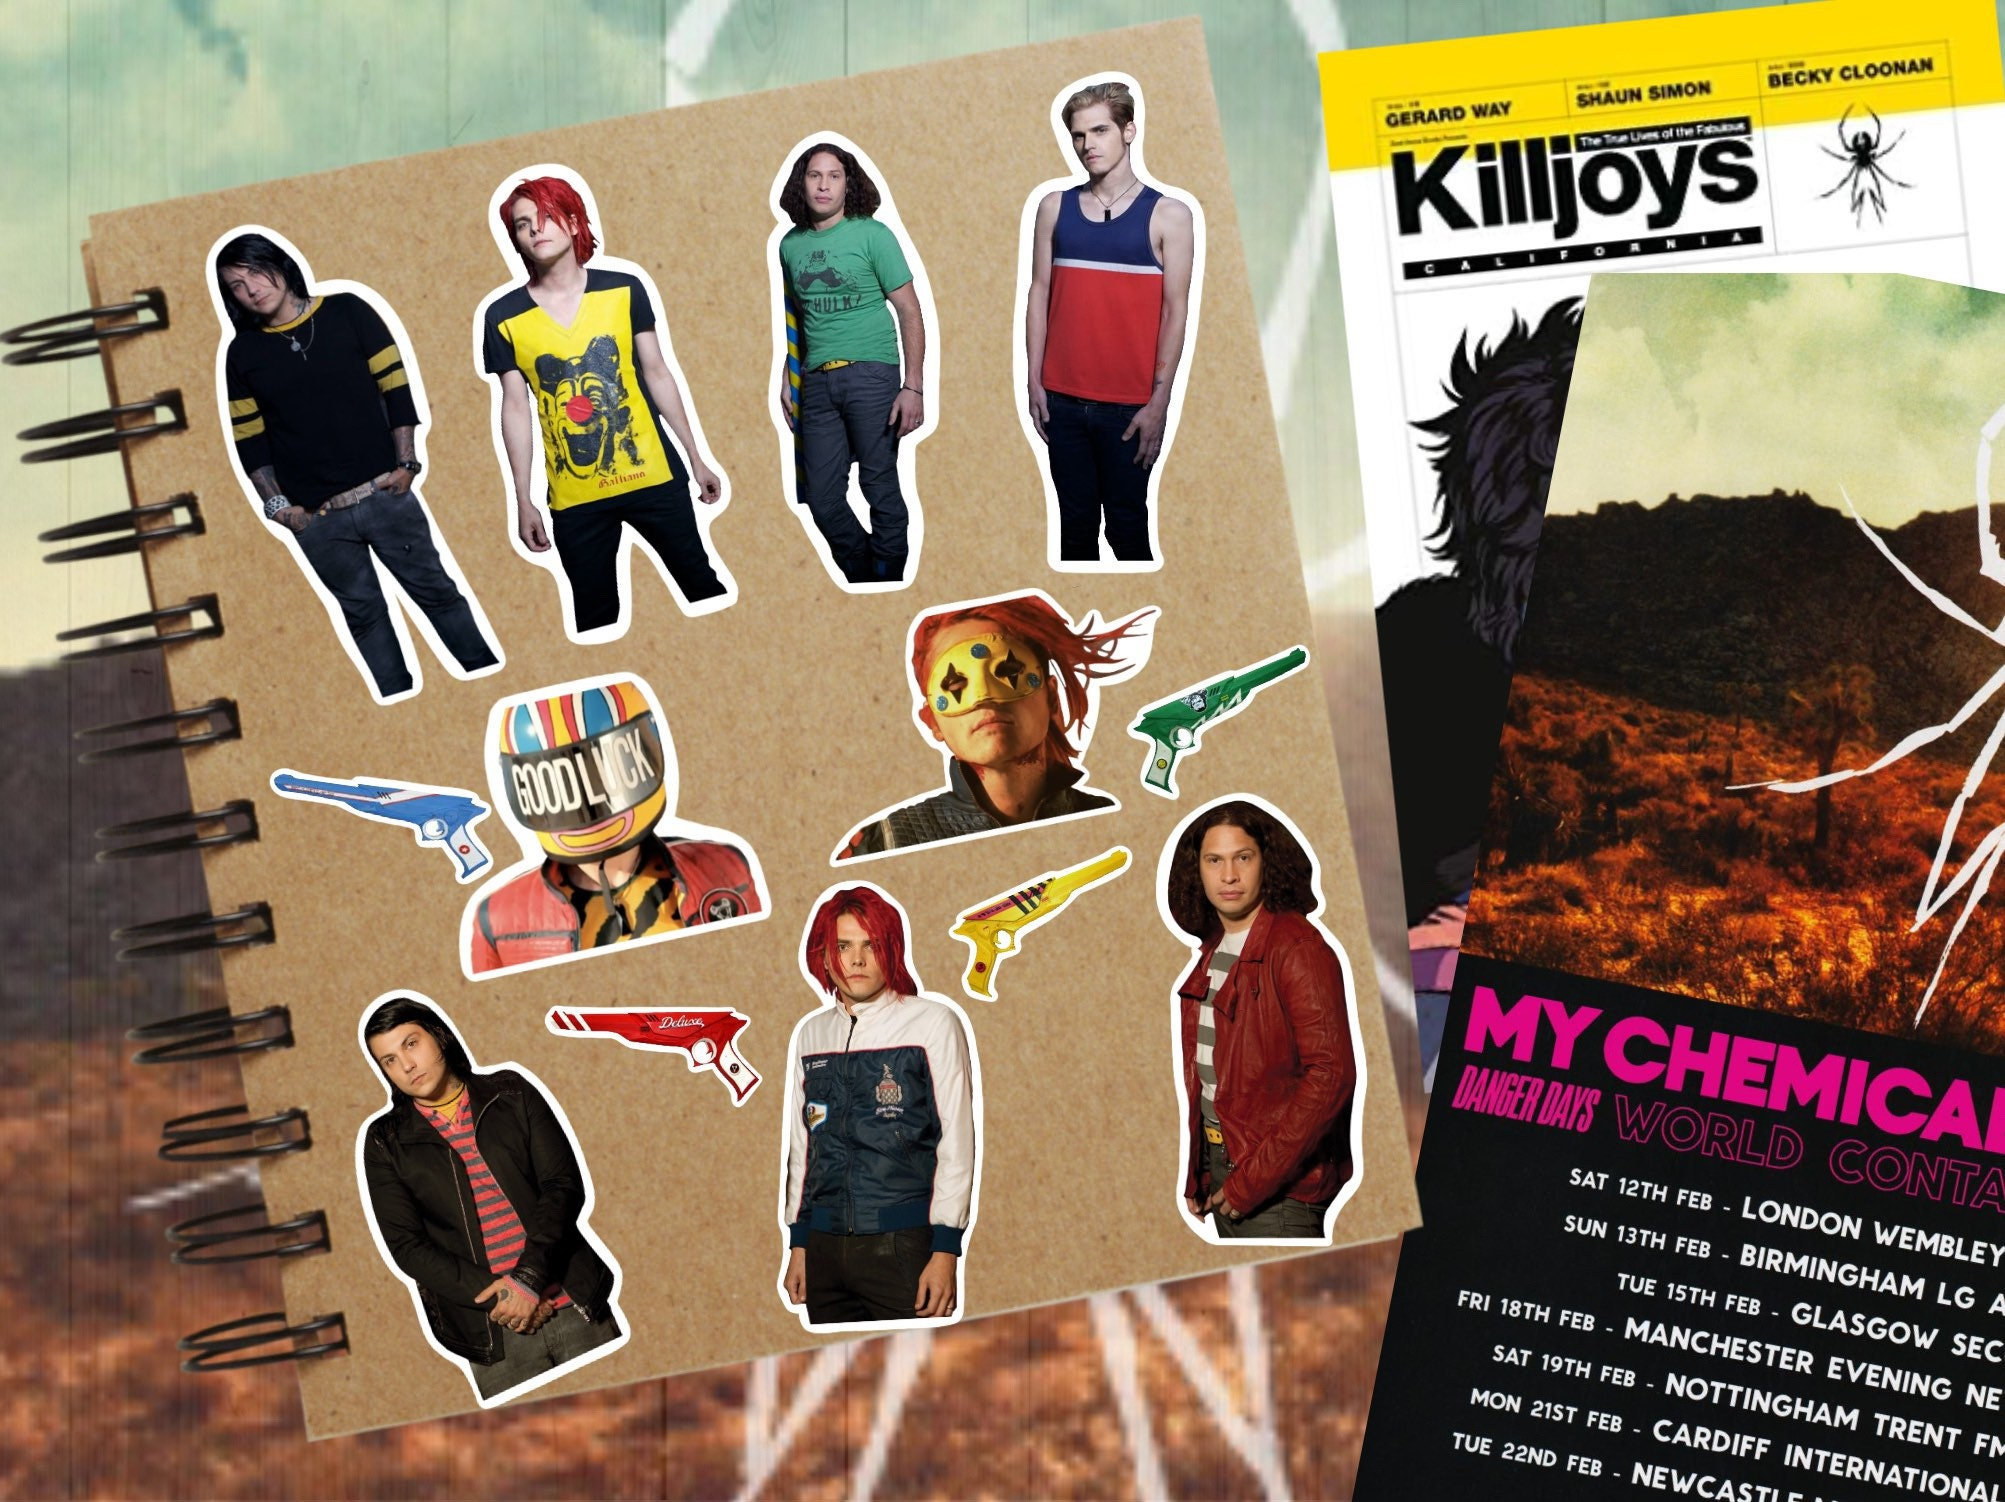 Killjoys seems like a worthy successor to Firefly in the fun space opera  genre  SF Bluestocking